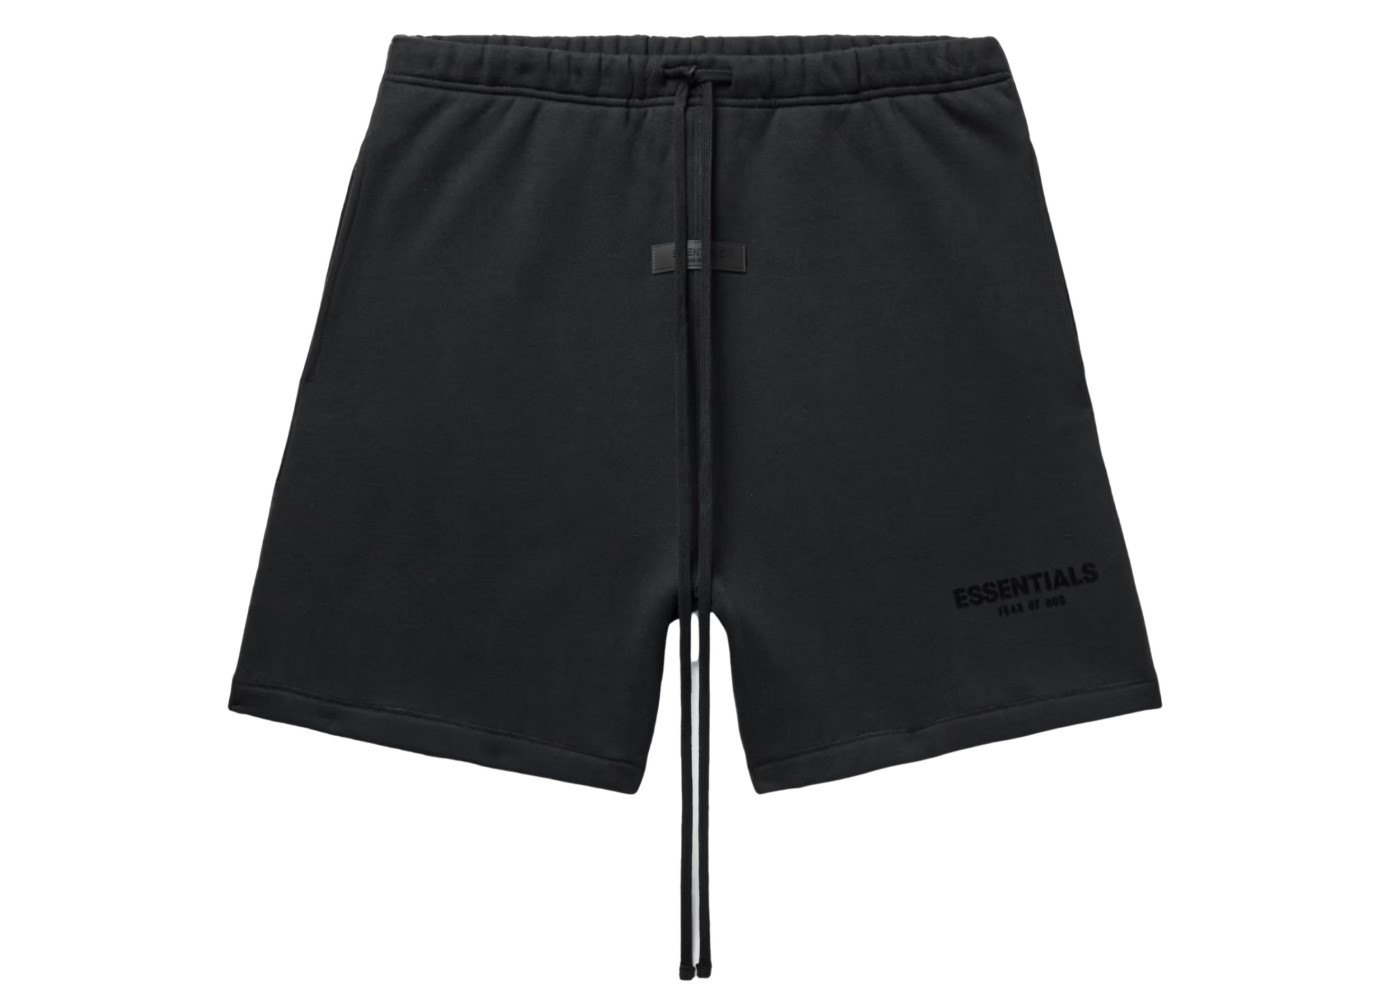 FOG Essentials Shorts Black (FW22)